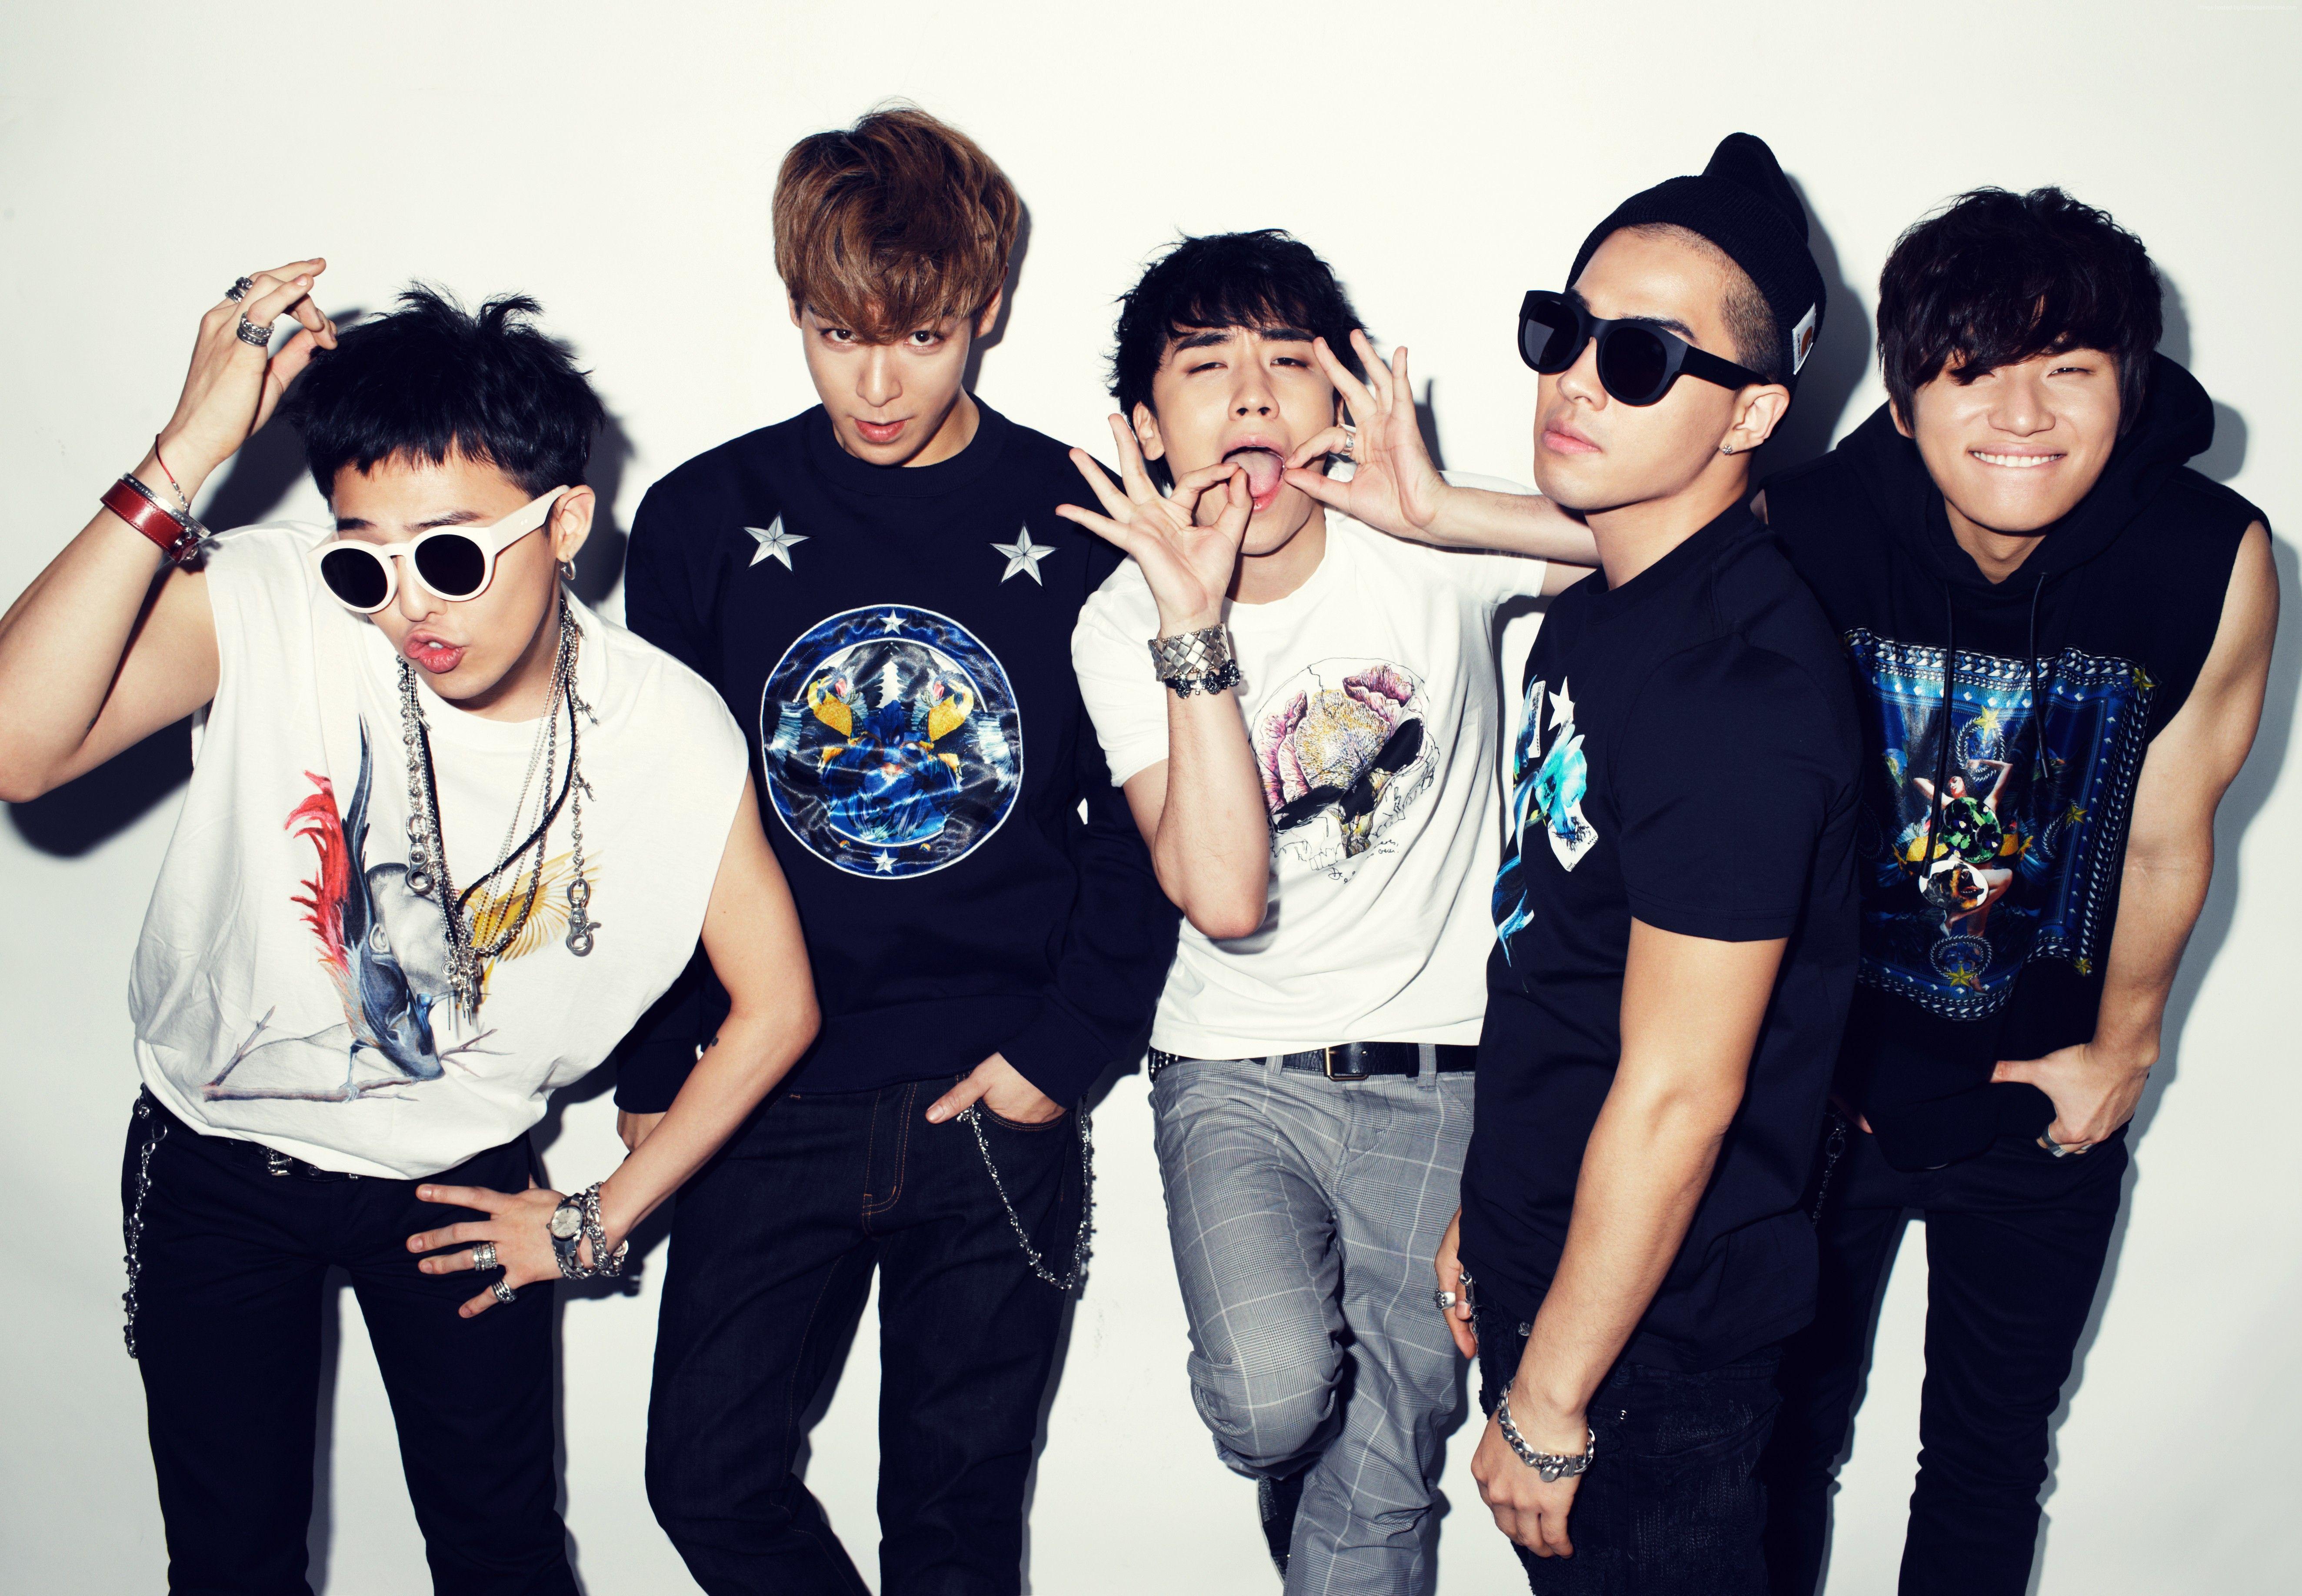 Big Bang Wallpaper, Celebrities / Artists: Big Bang, Top music